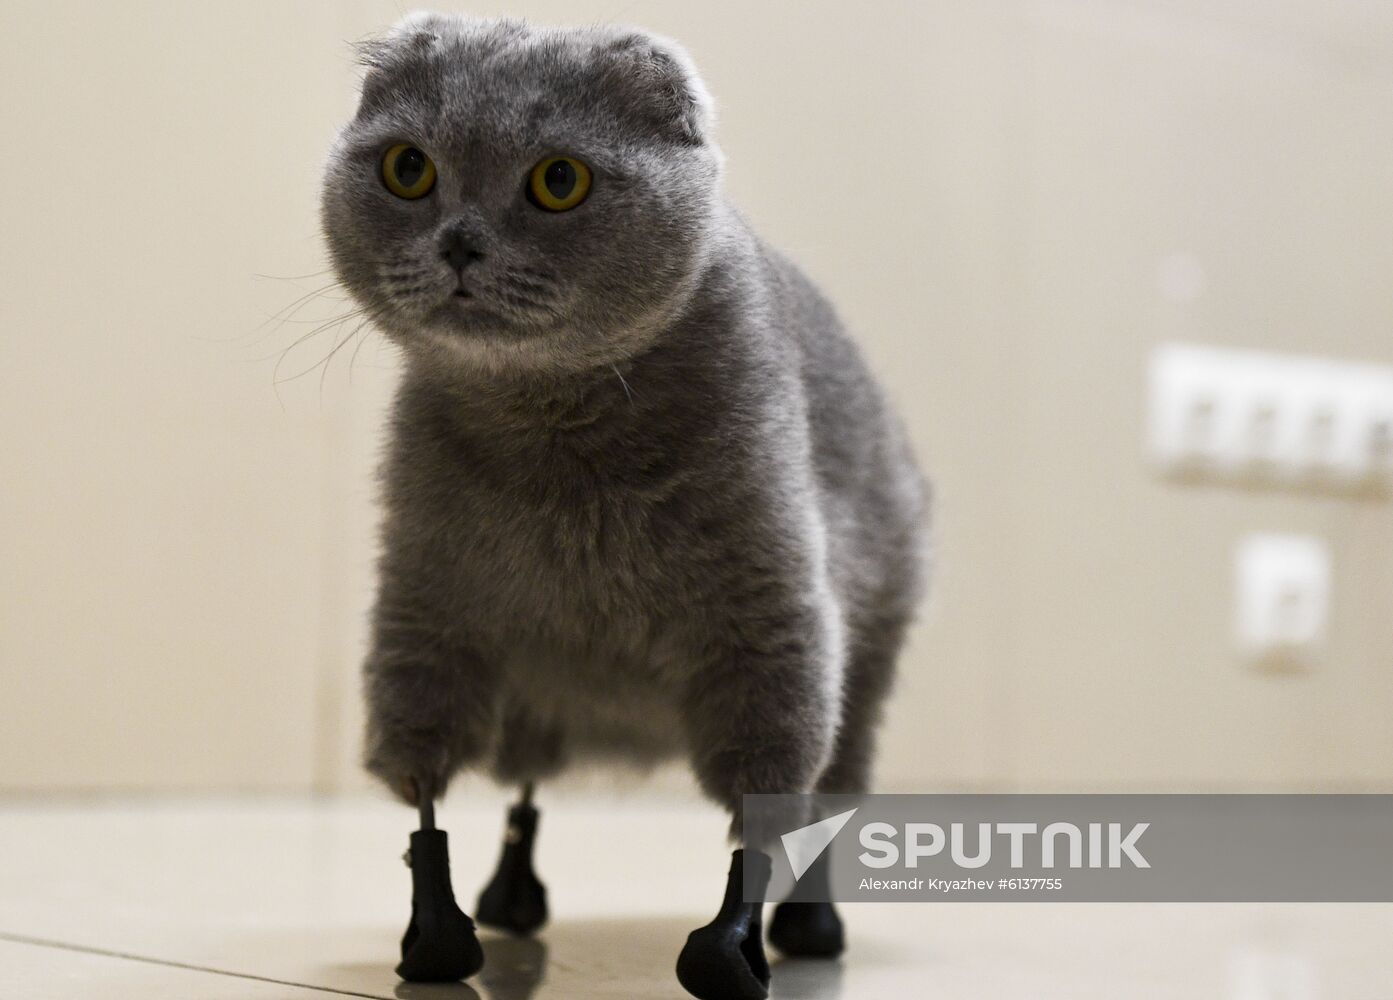 Russia Prosthetic Cat